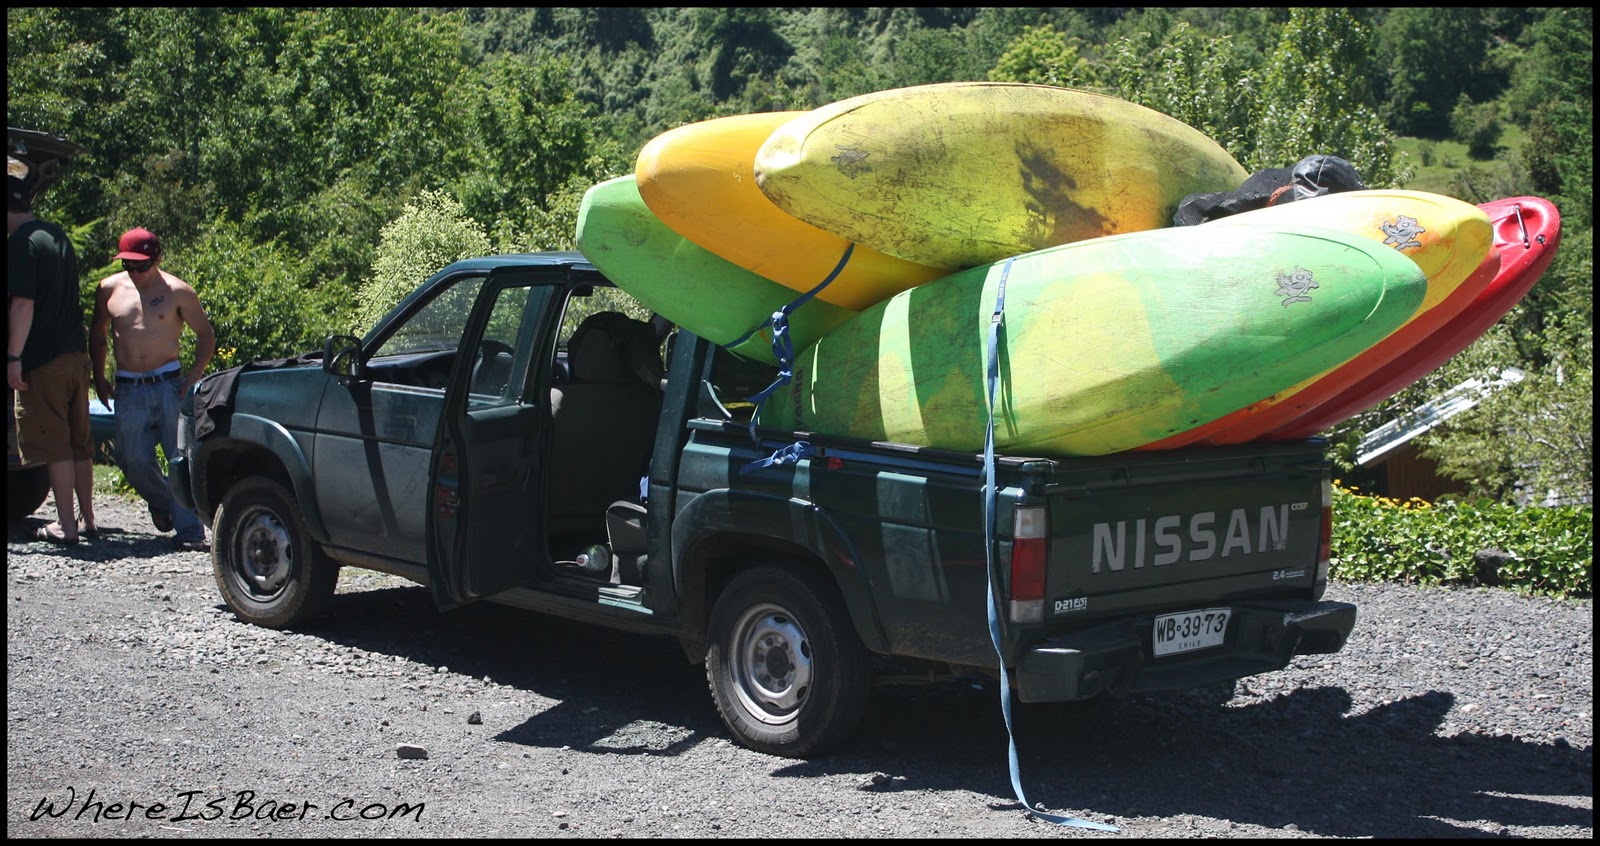 WRSI ATHLETES &amp; NEWS: How to travel with a kayak internationally,